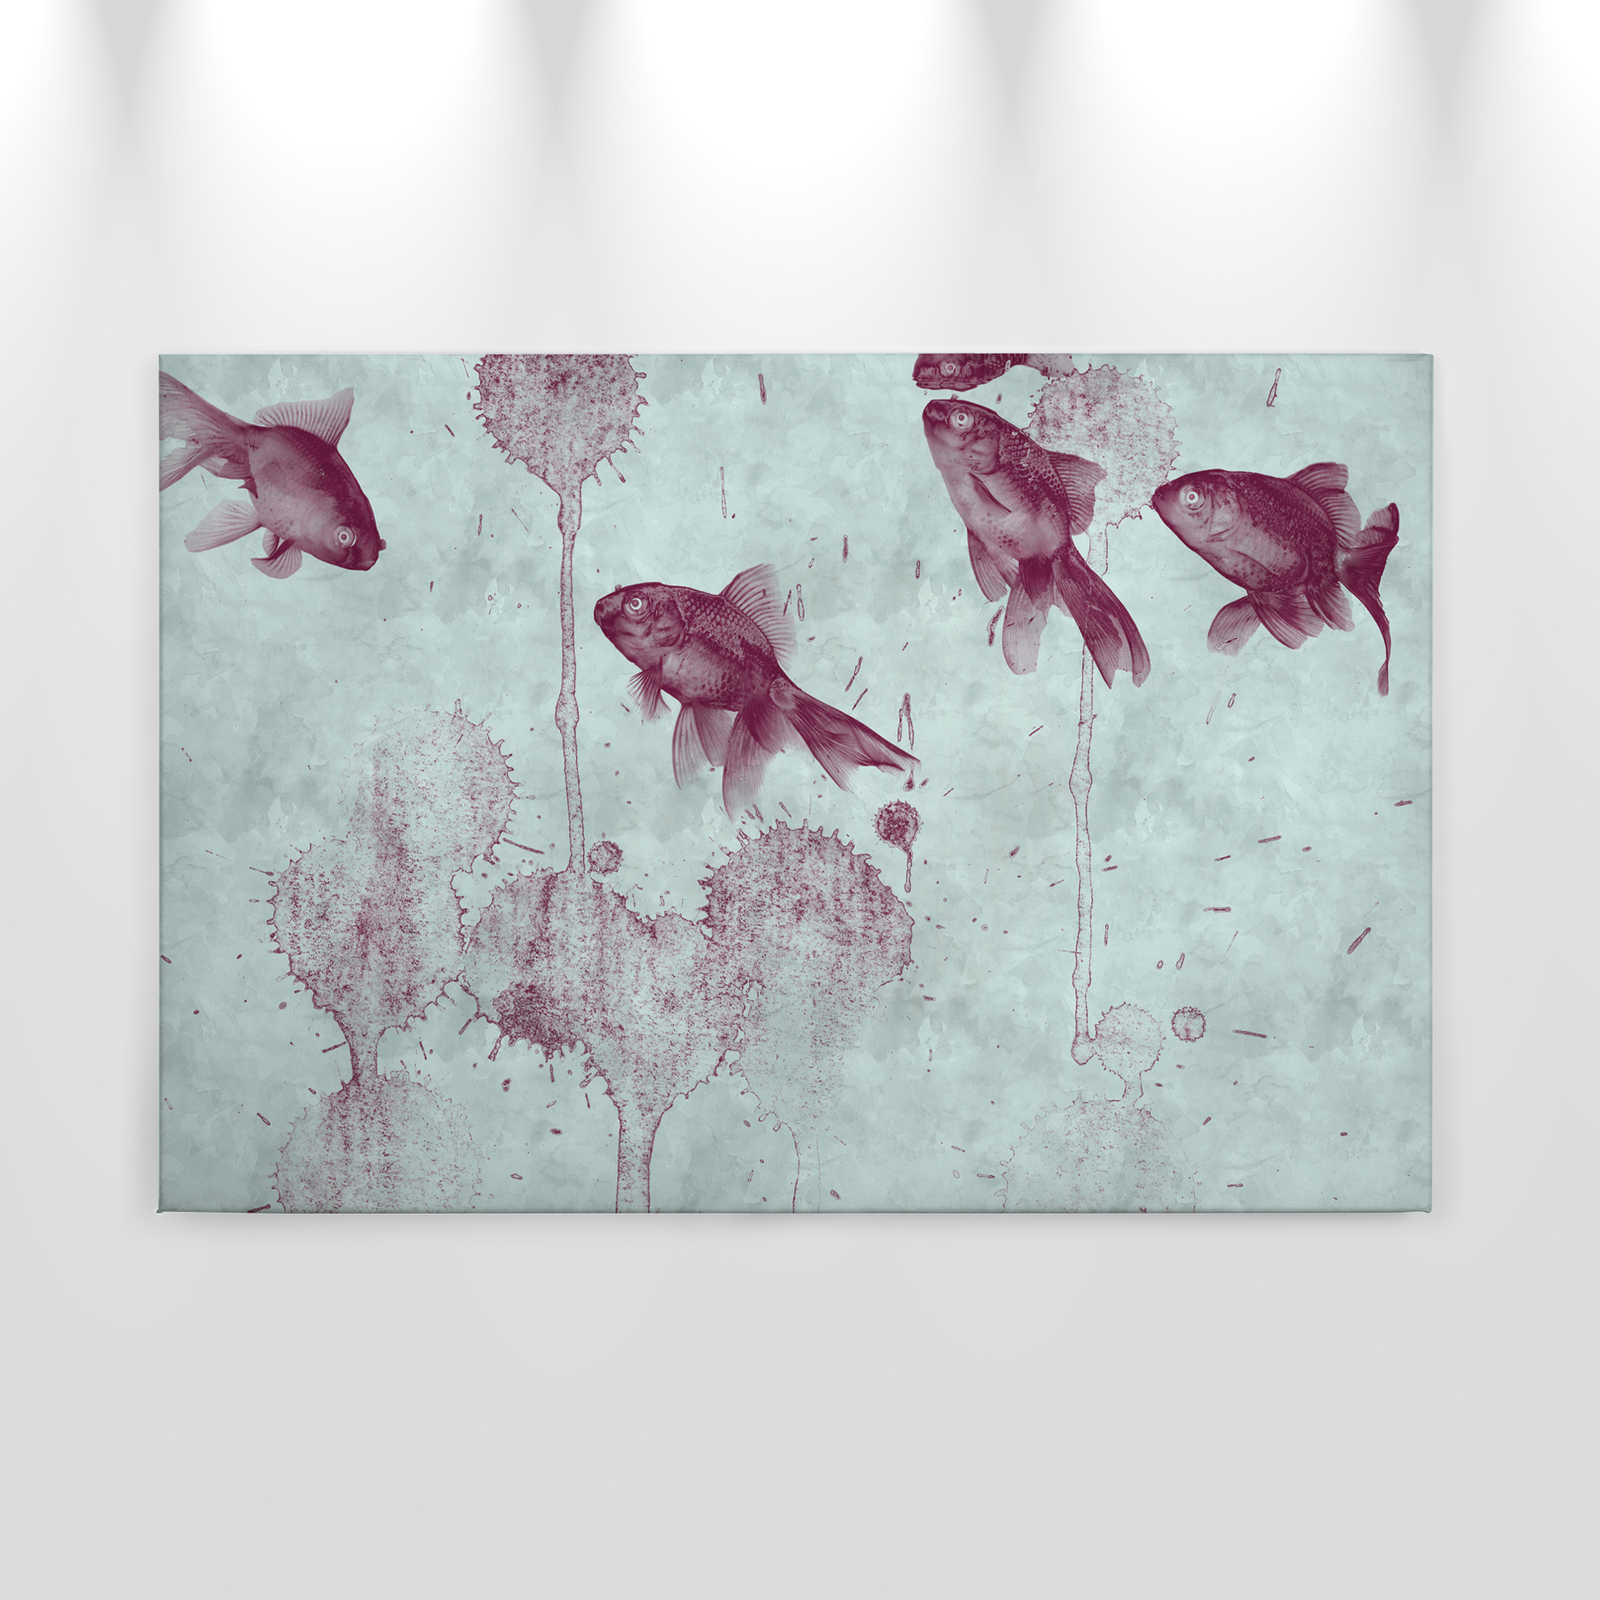             moderness Cuadro en lienzo Diseño de pez en estilo acuarela - 0,90 m x 0,60 m
        